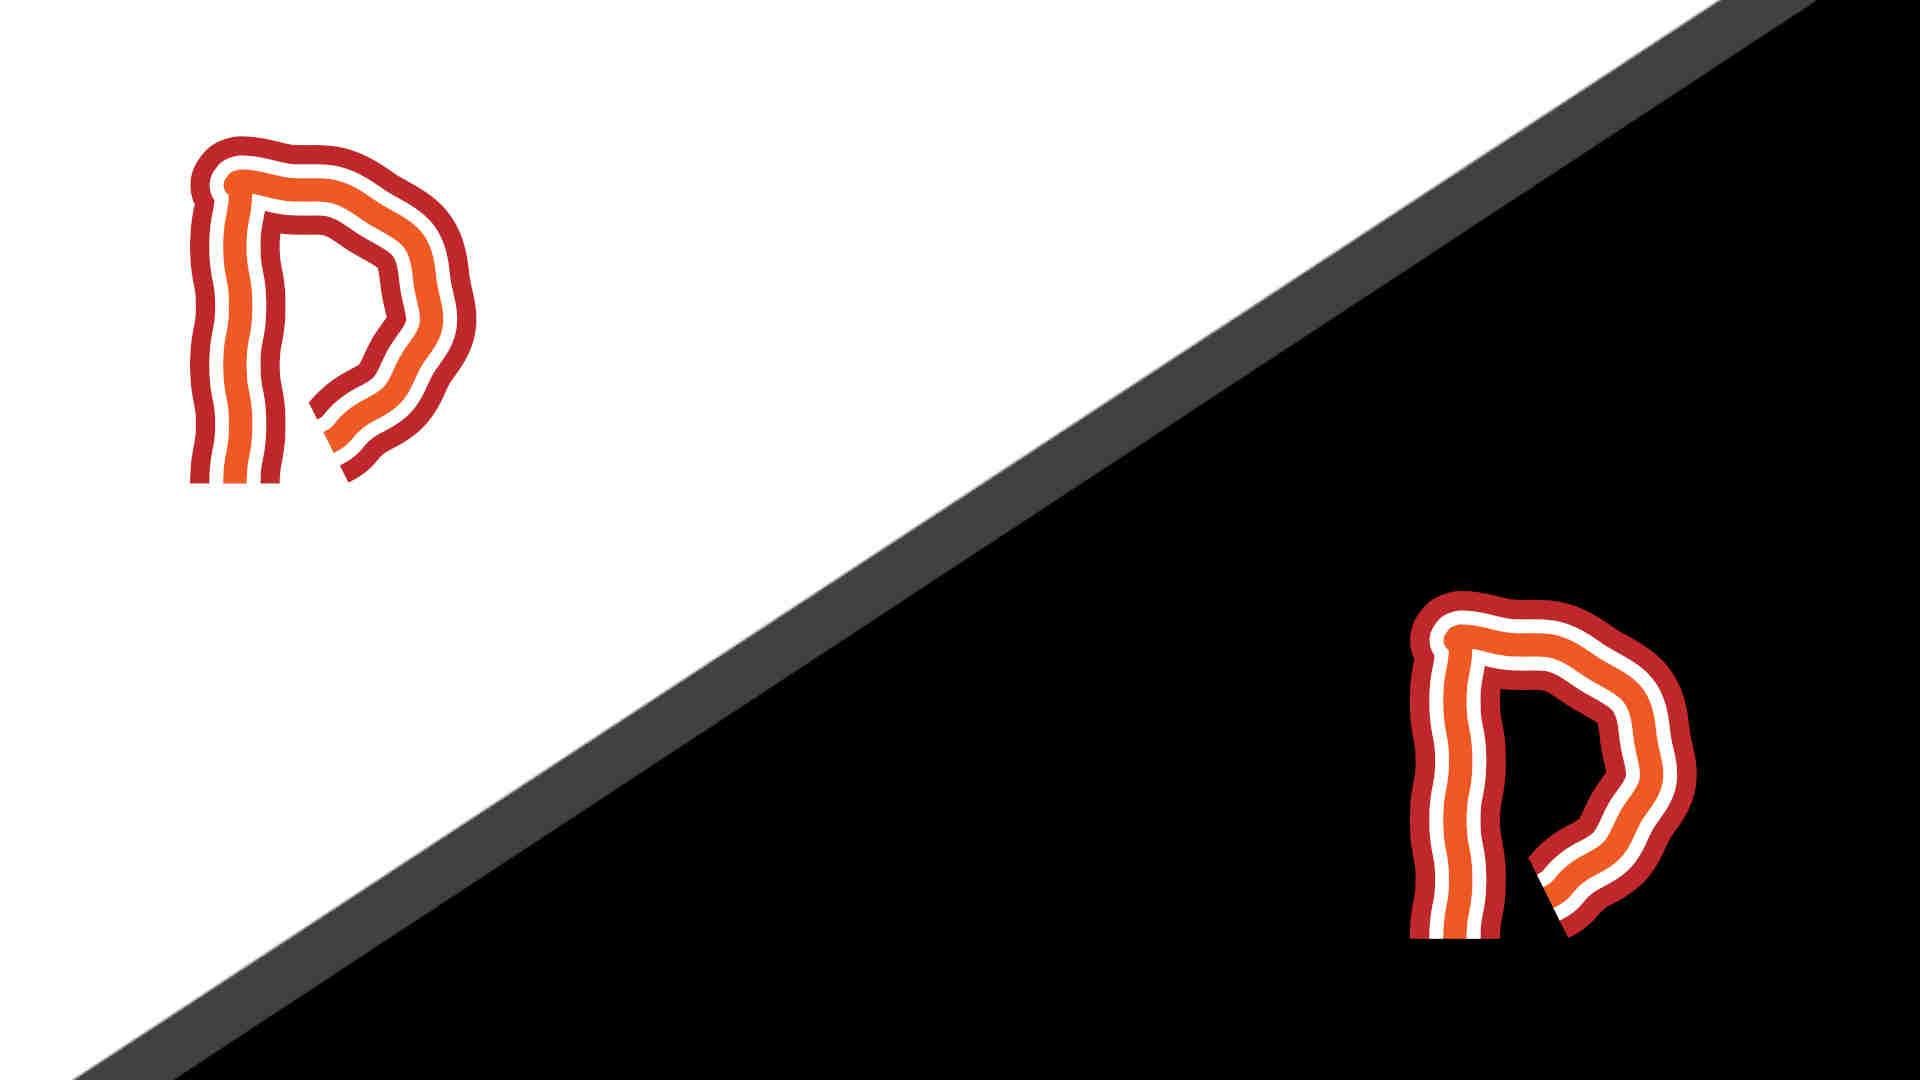 A split image of the developer bacon logo on a black then white background